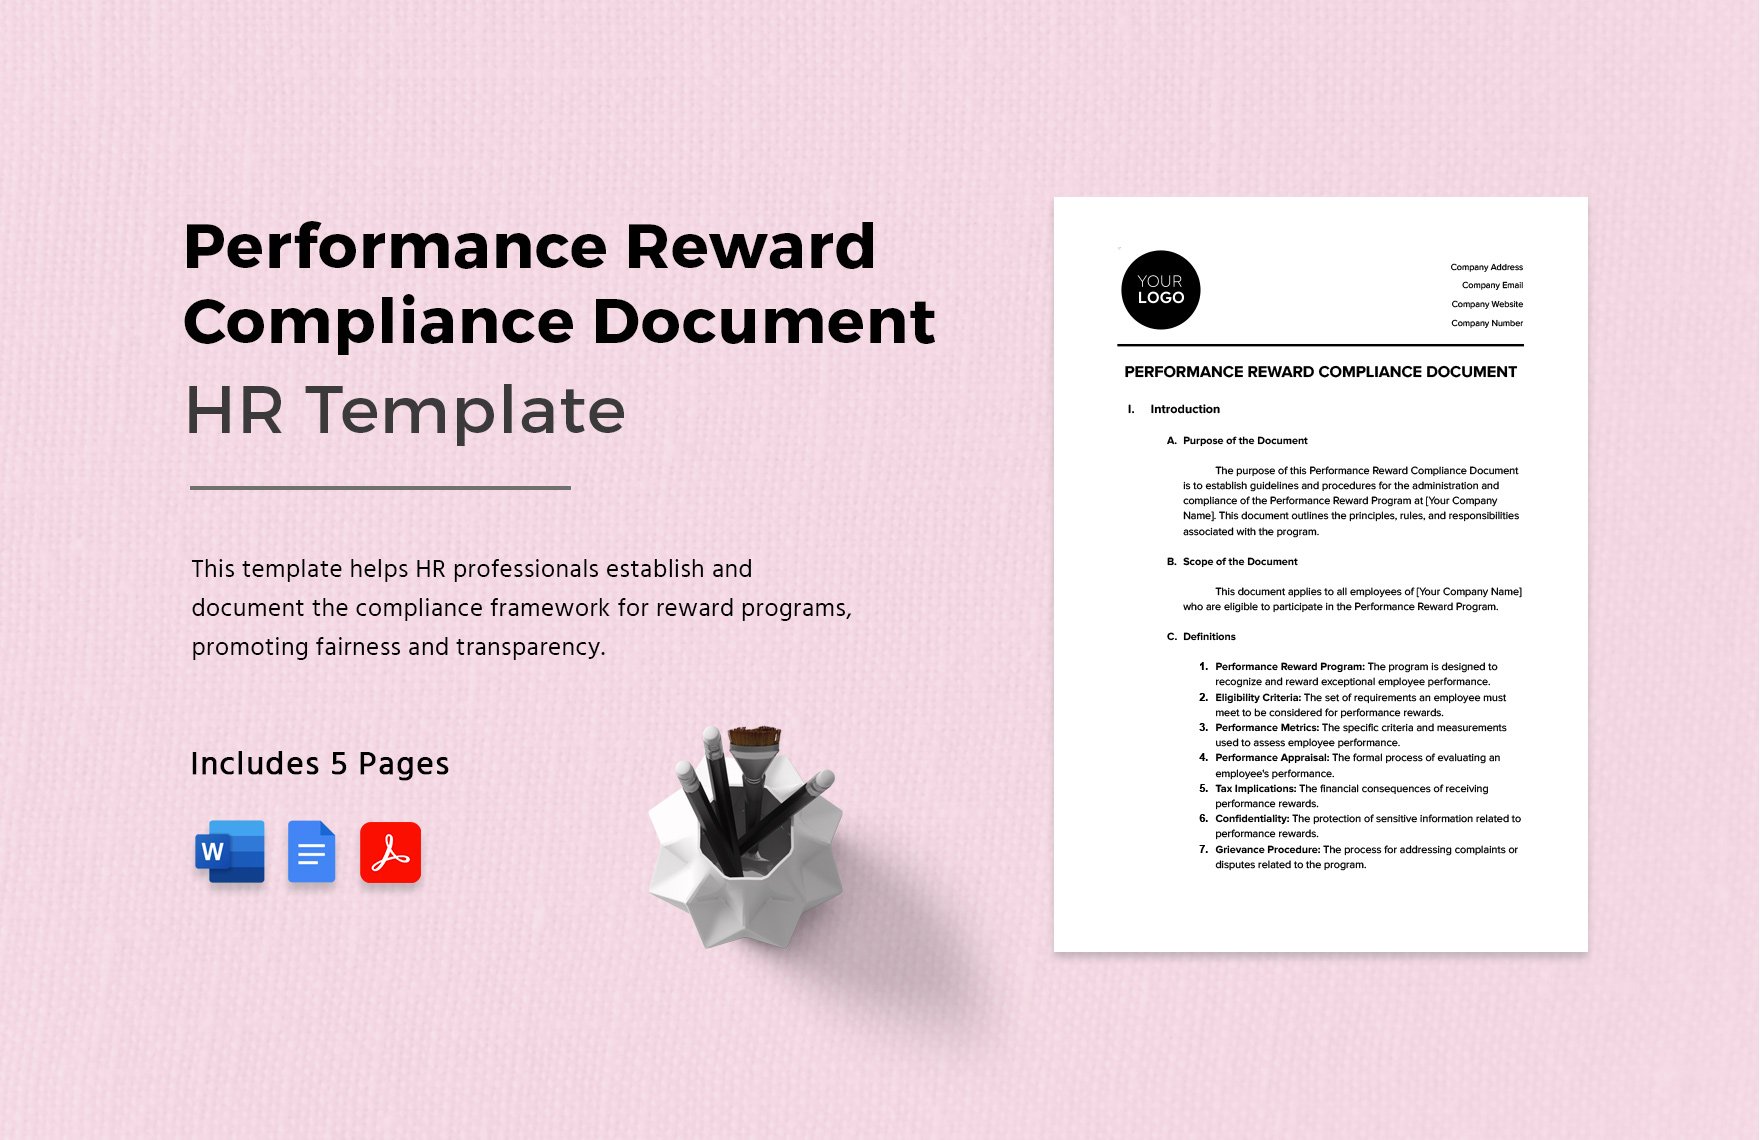 Performance Reward Compliance Document HR Template